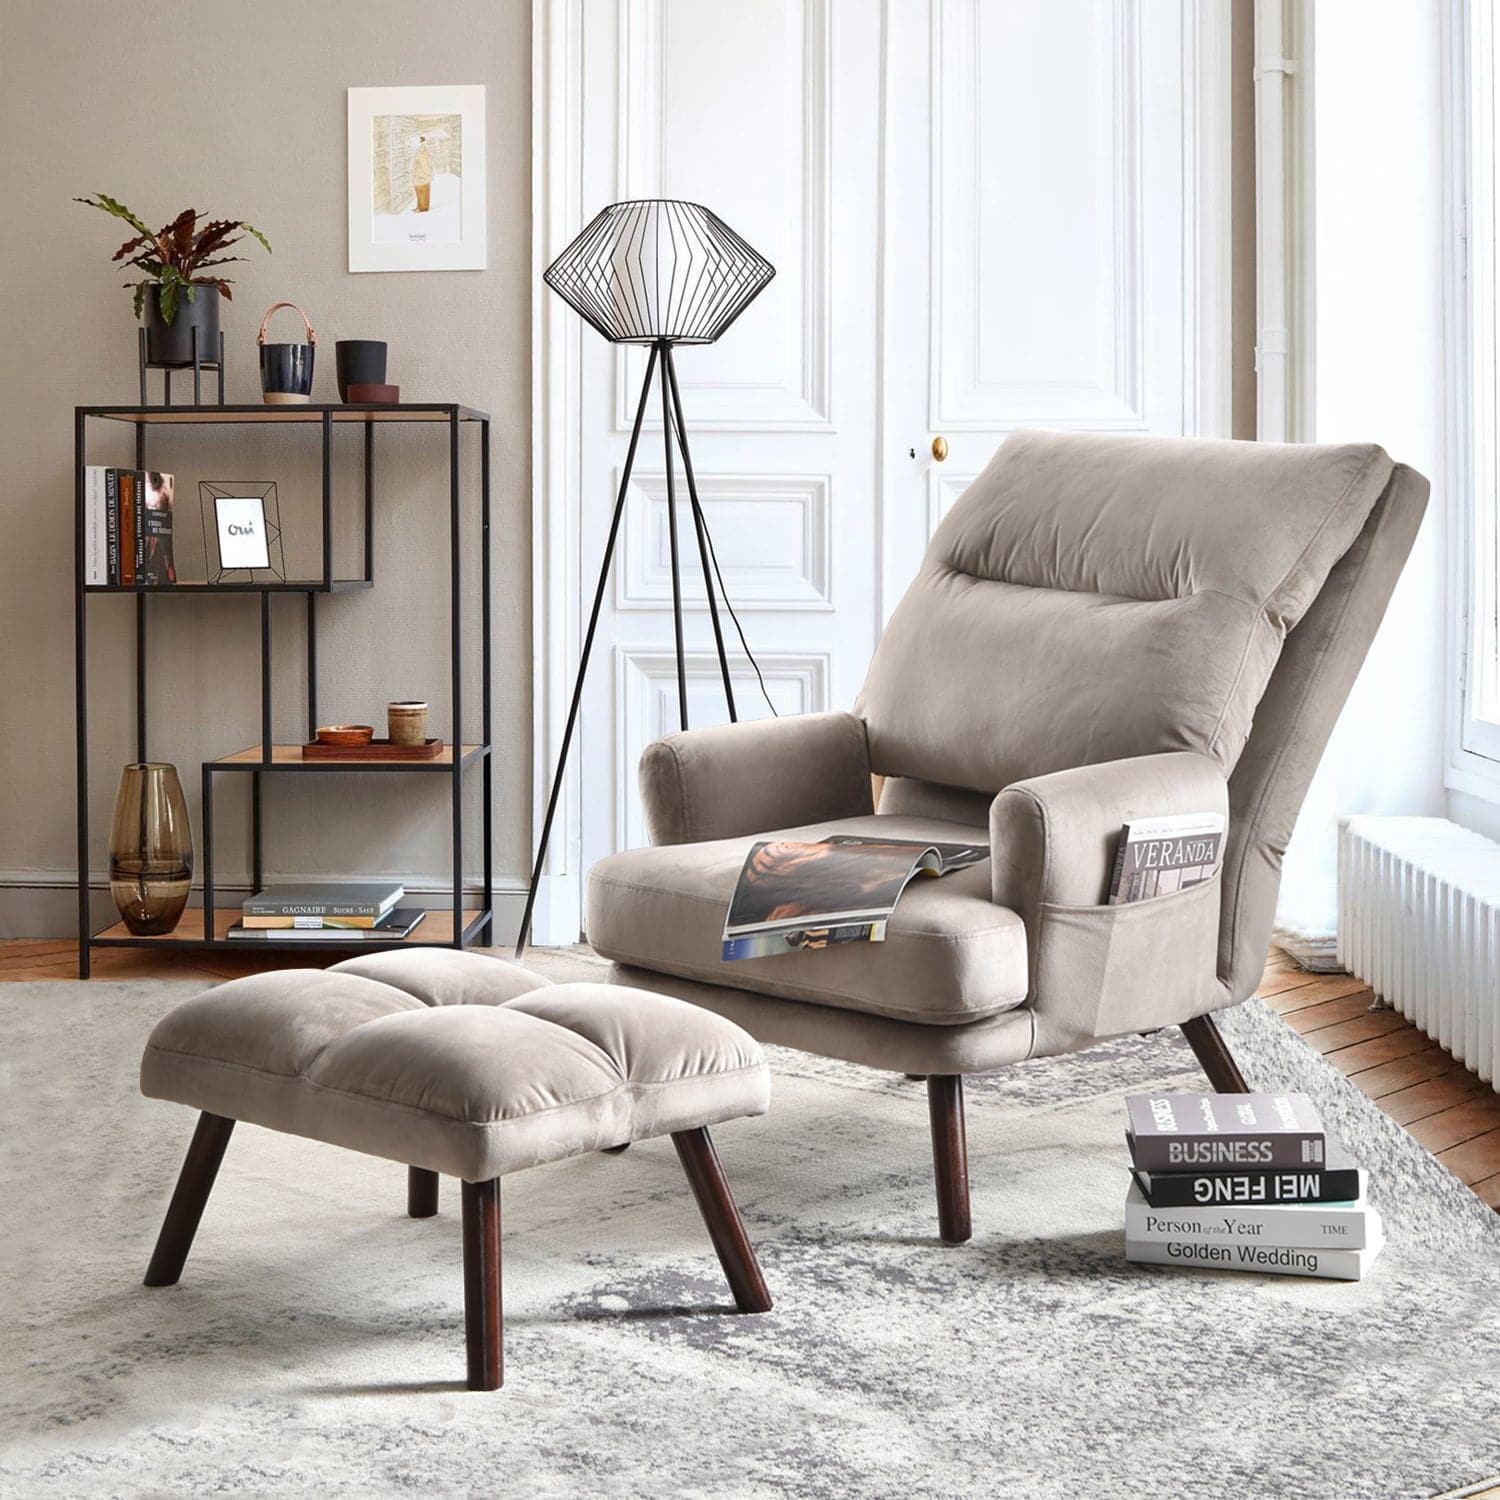 OMO Modern Memory Foam Lounge Chair with Ottoman